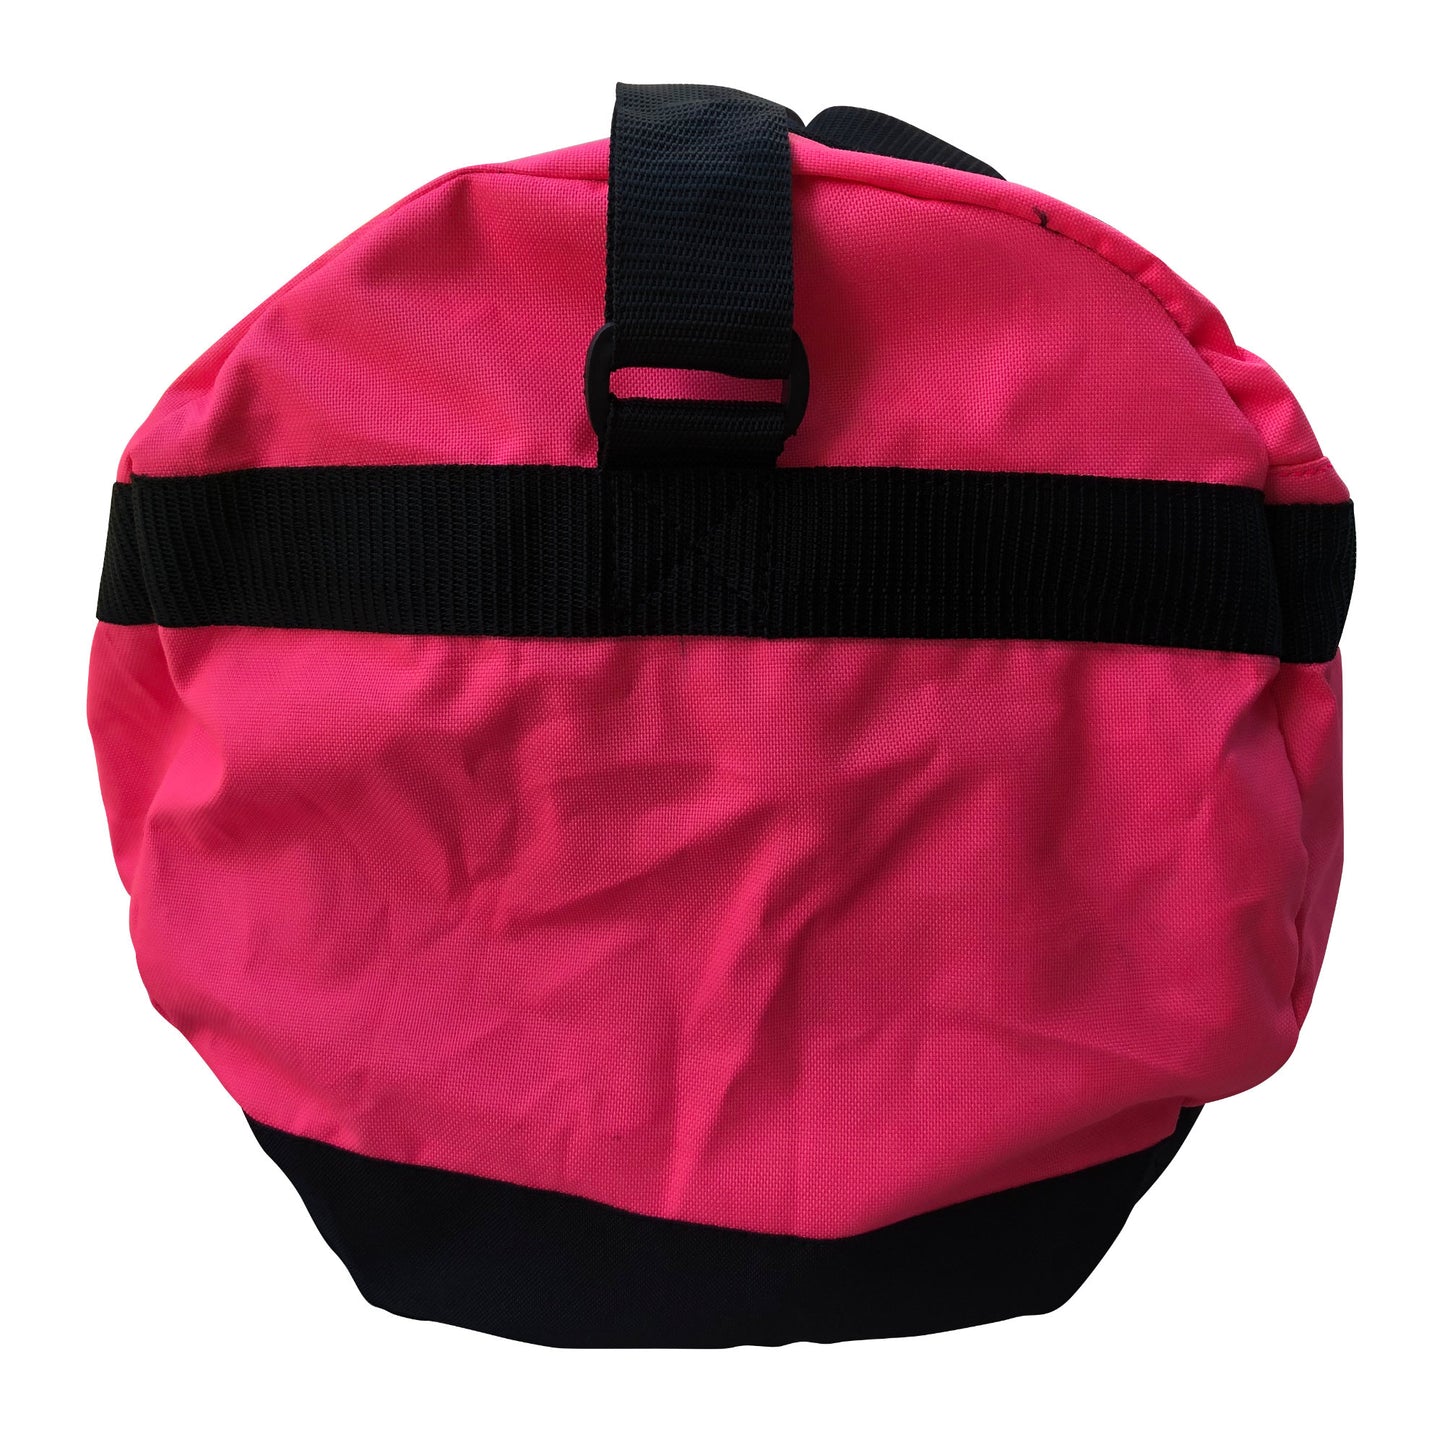 Team Elite Sports Bag - Pink